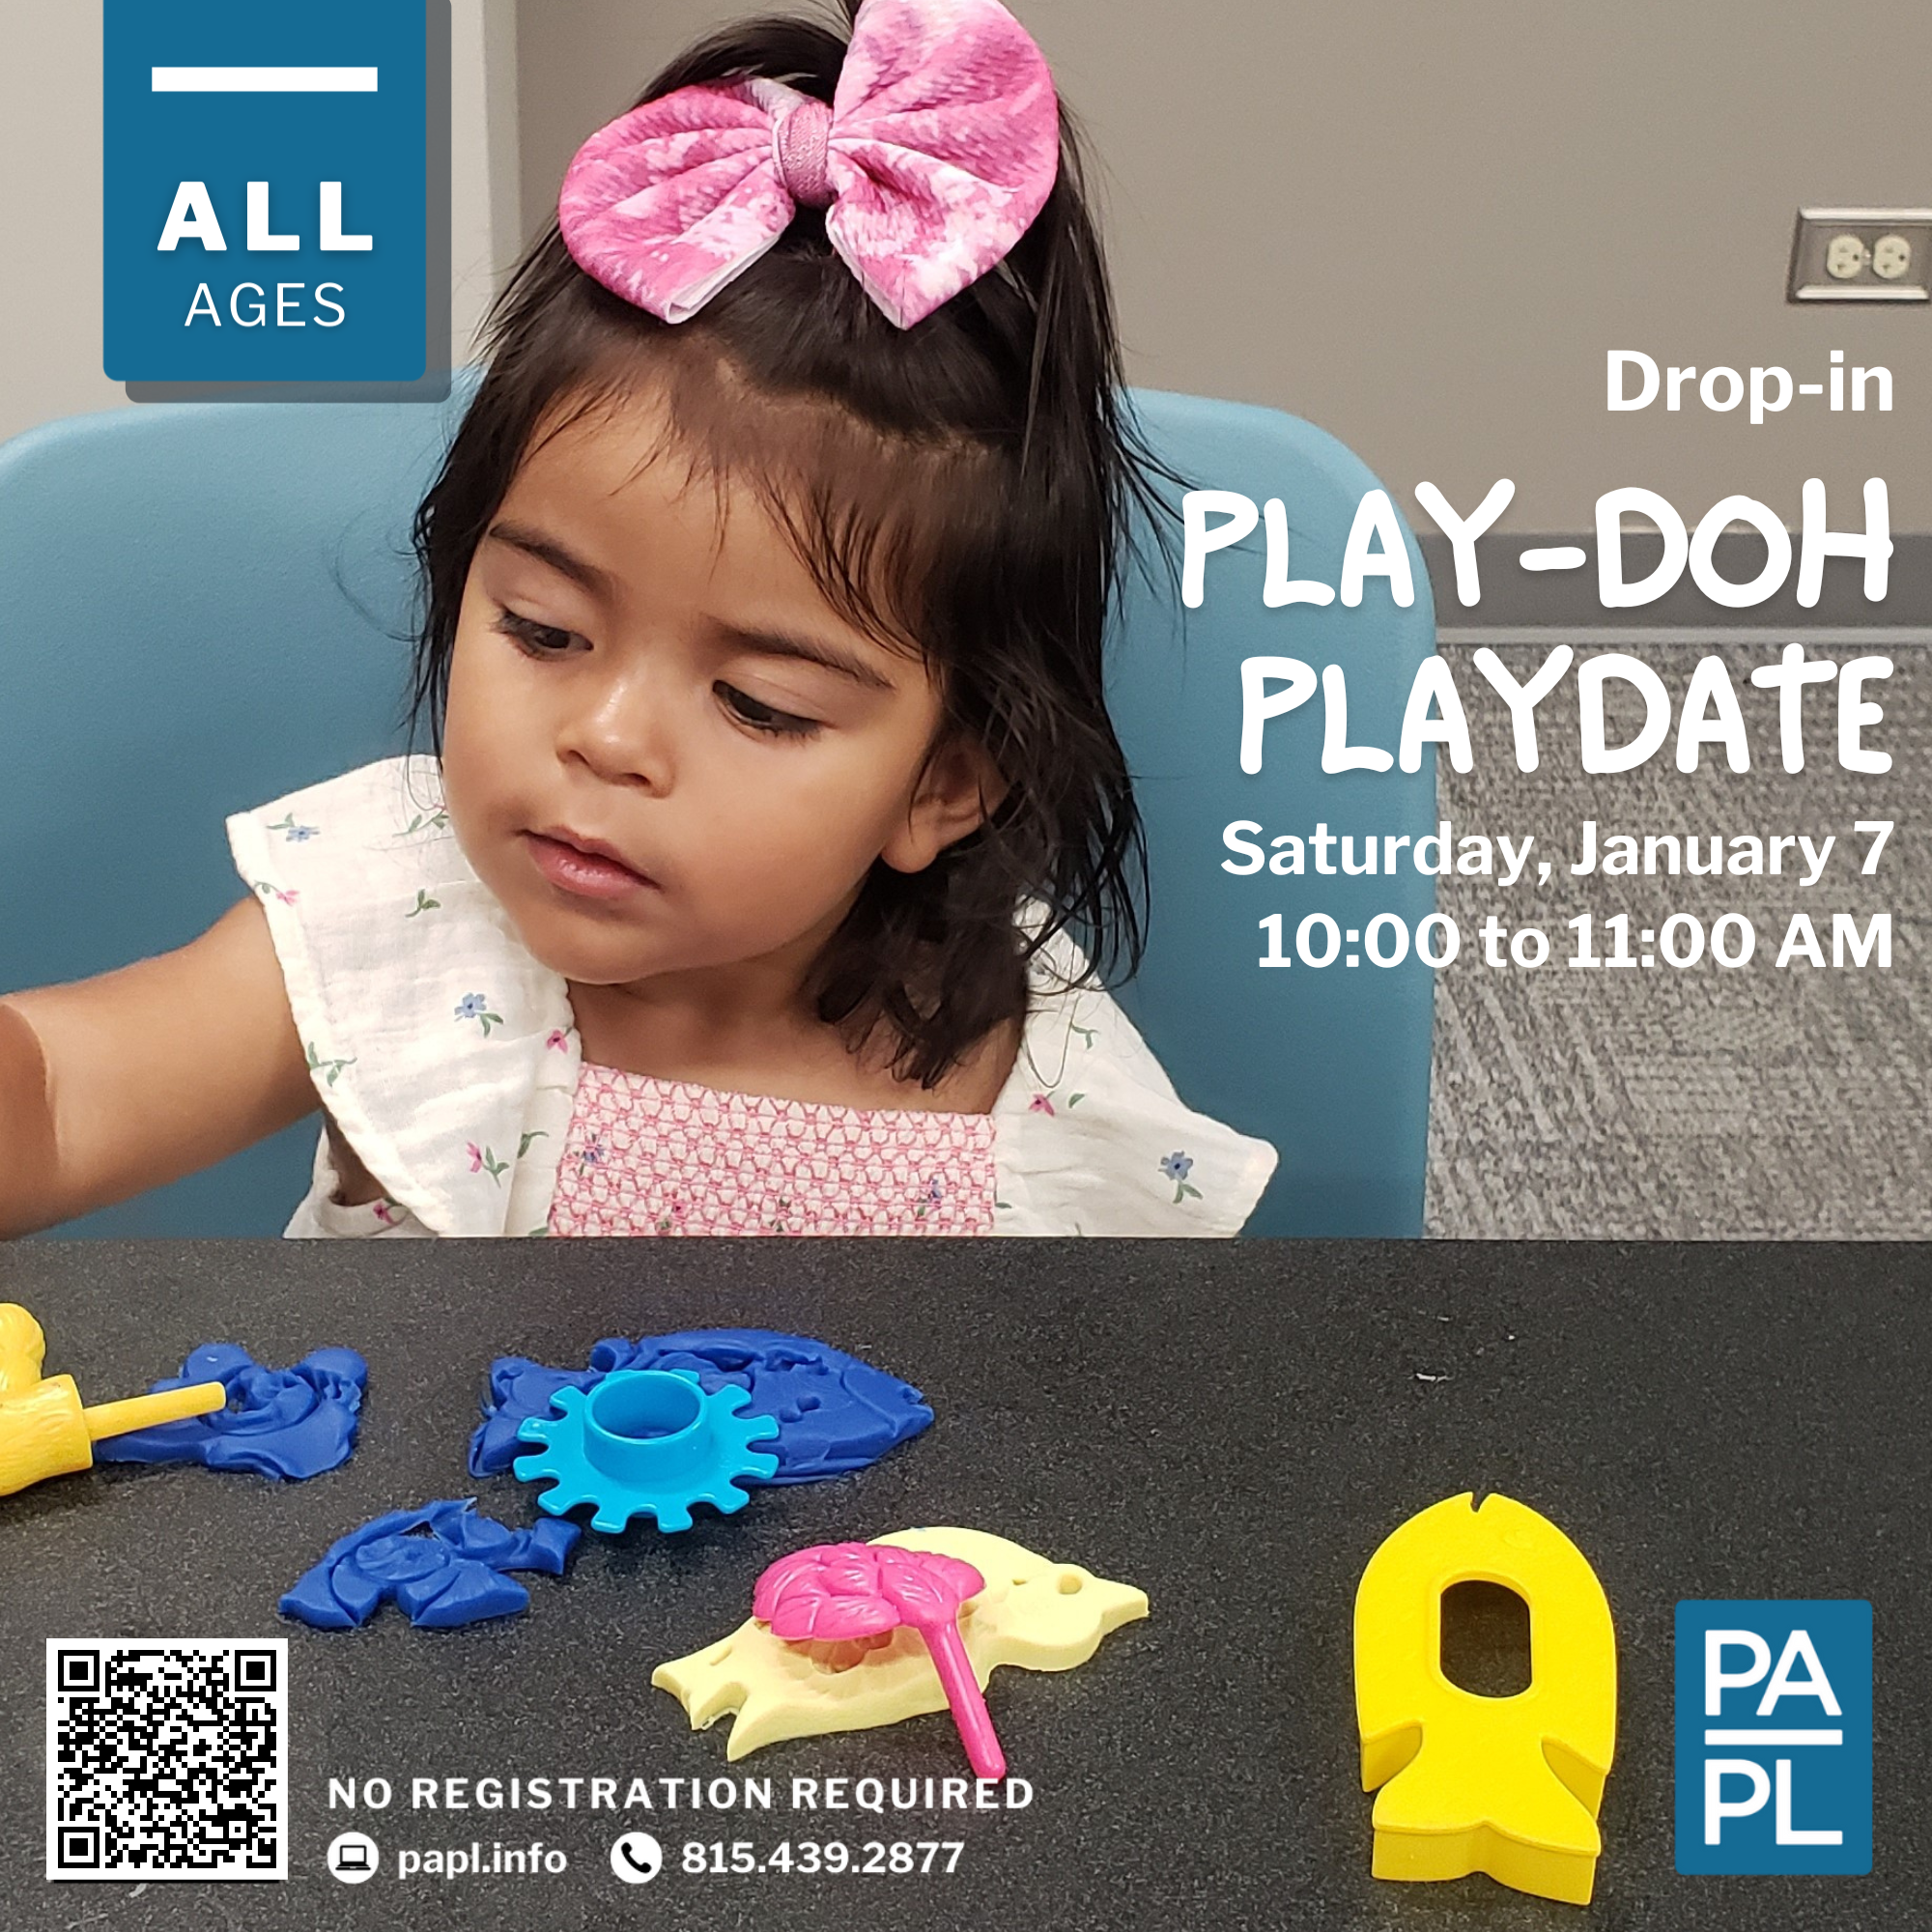 Drop-in Play-Doh Playdate